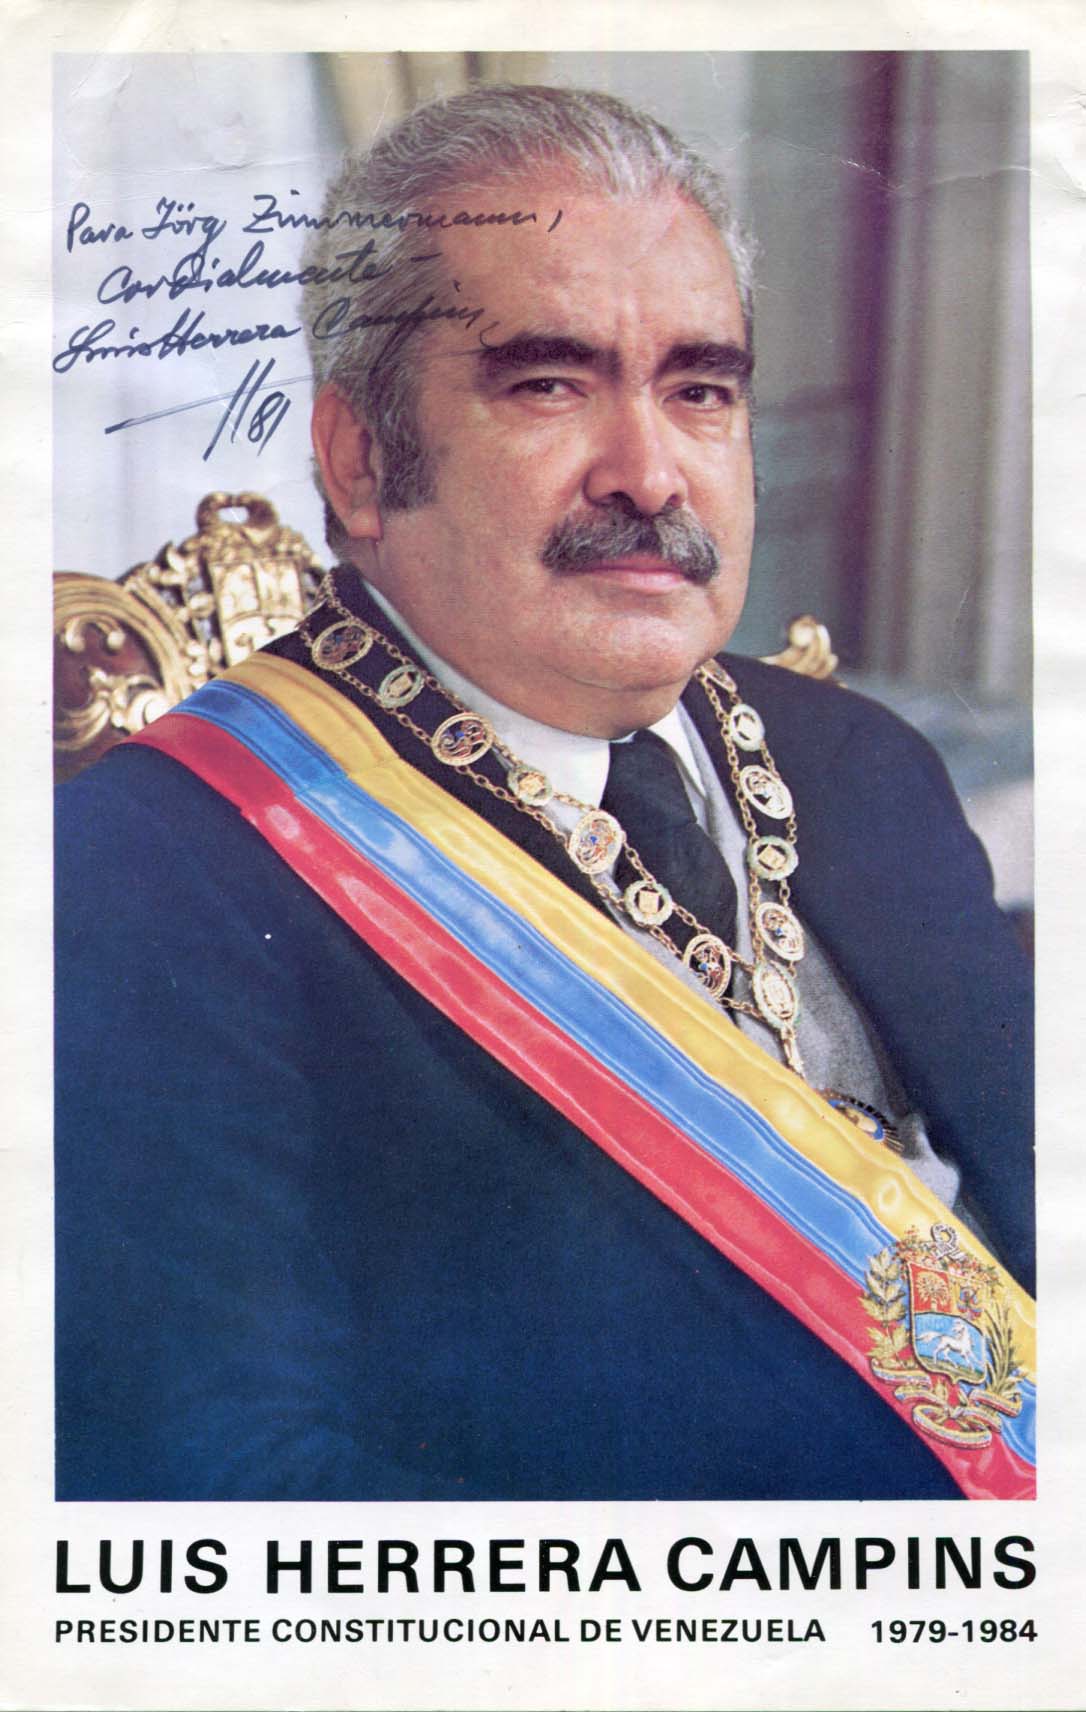 Luis Herrera Campins Autograph Autogramm | ID 8056804180117